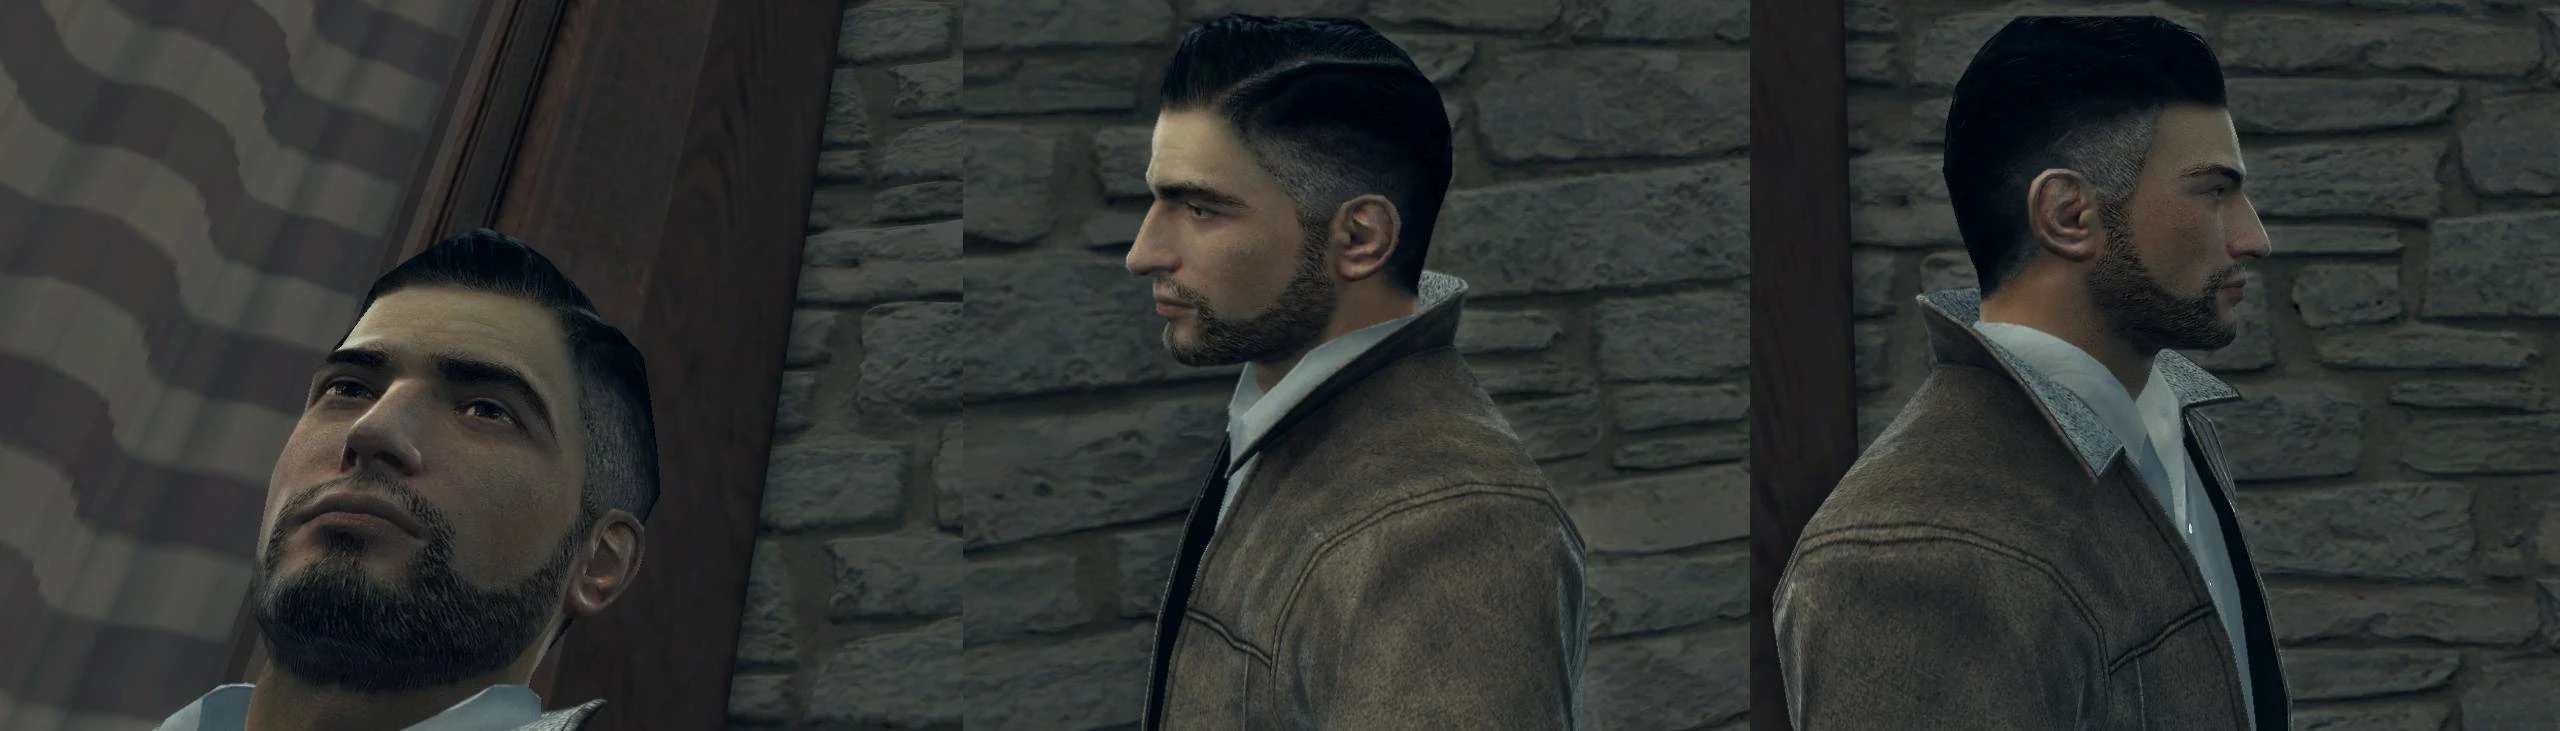 Mafia III New Haircuts mod at Mafia III - Nexus mods and community